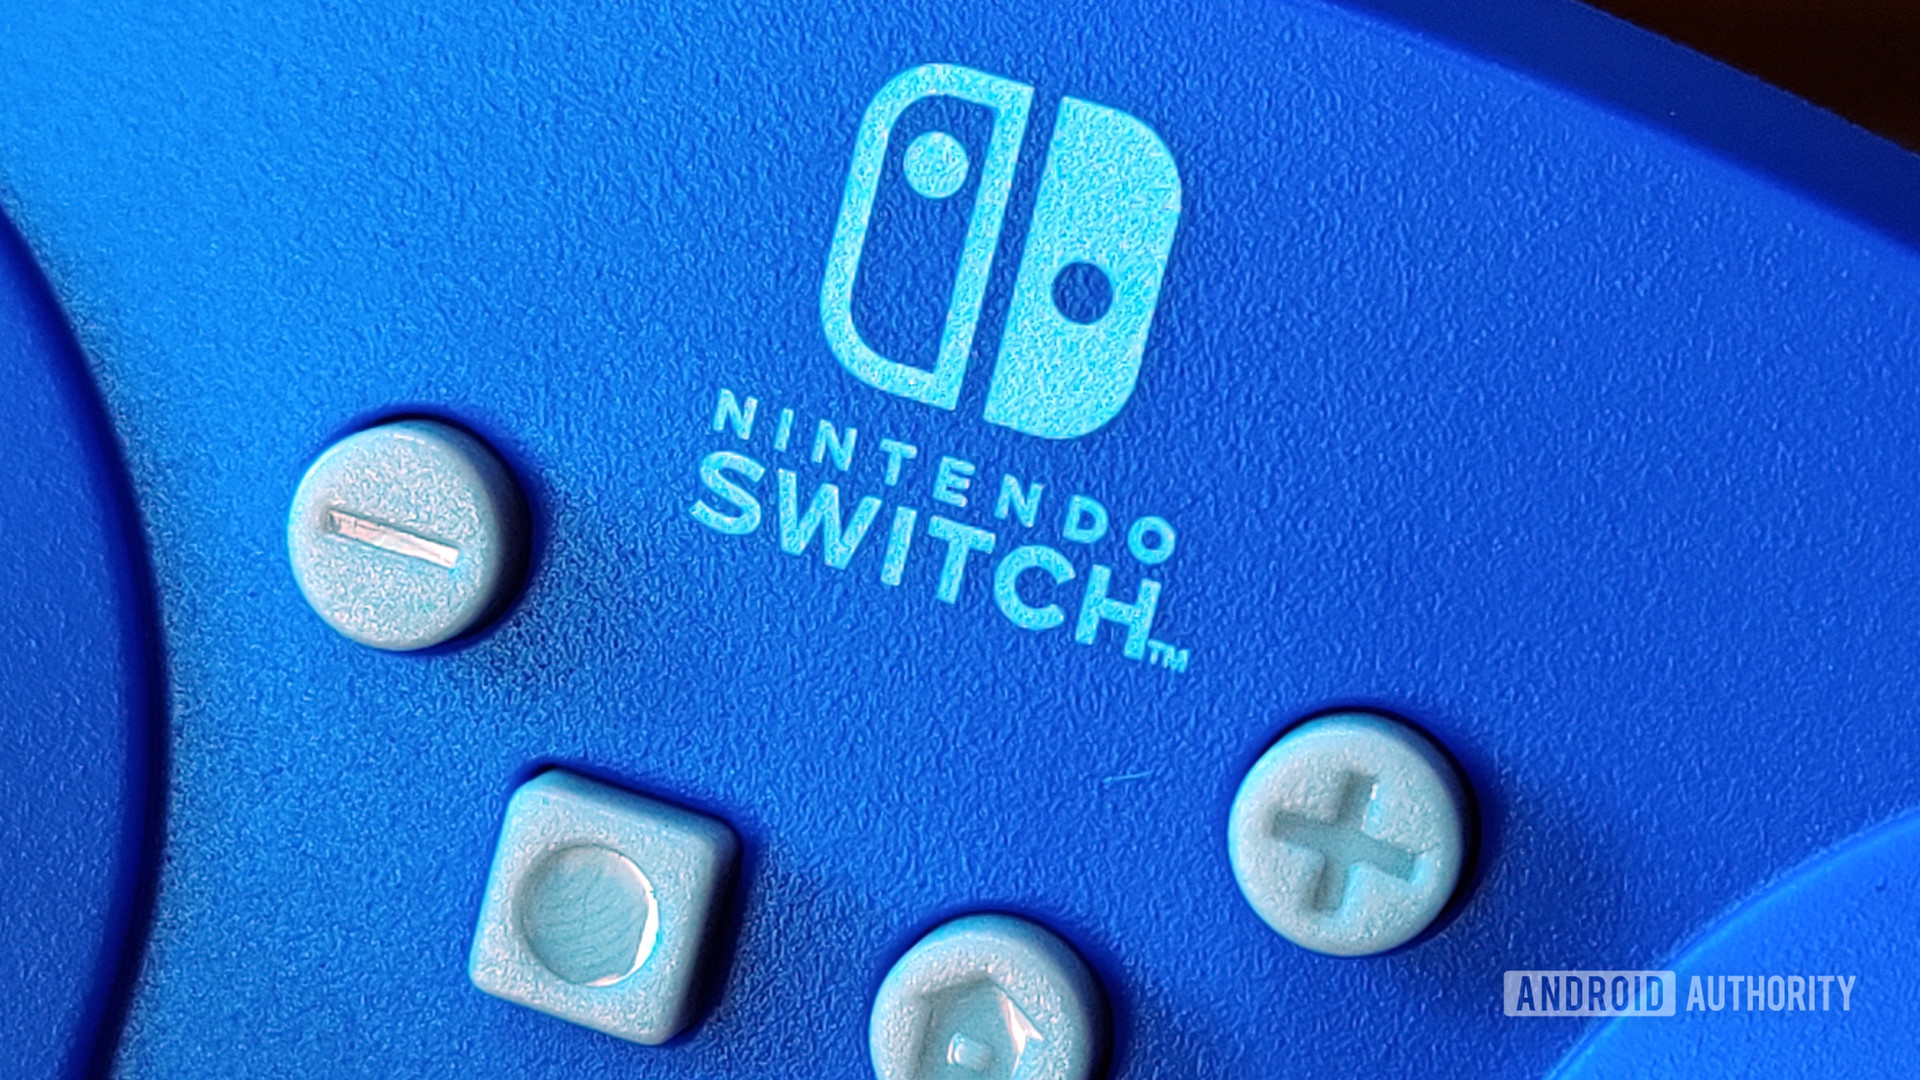 PowerA GameCube Wireless Controller for Nintendo Switch Logo